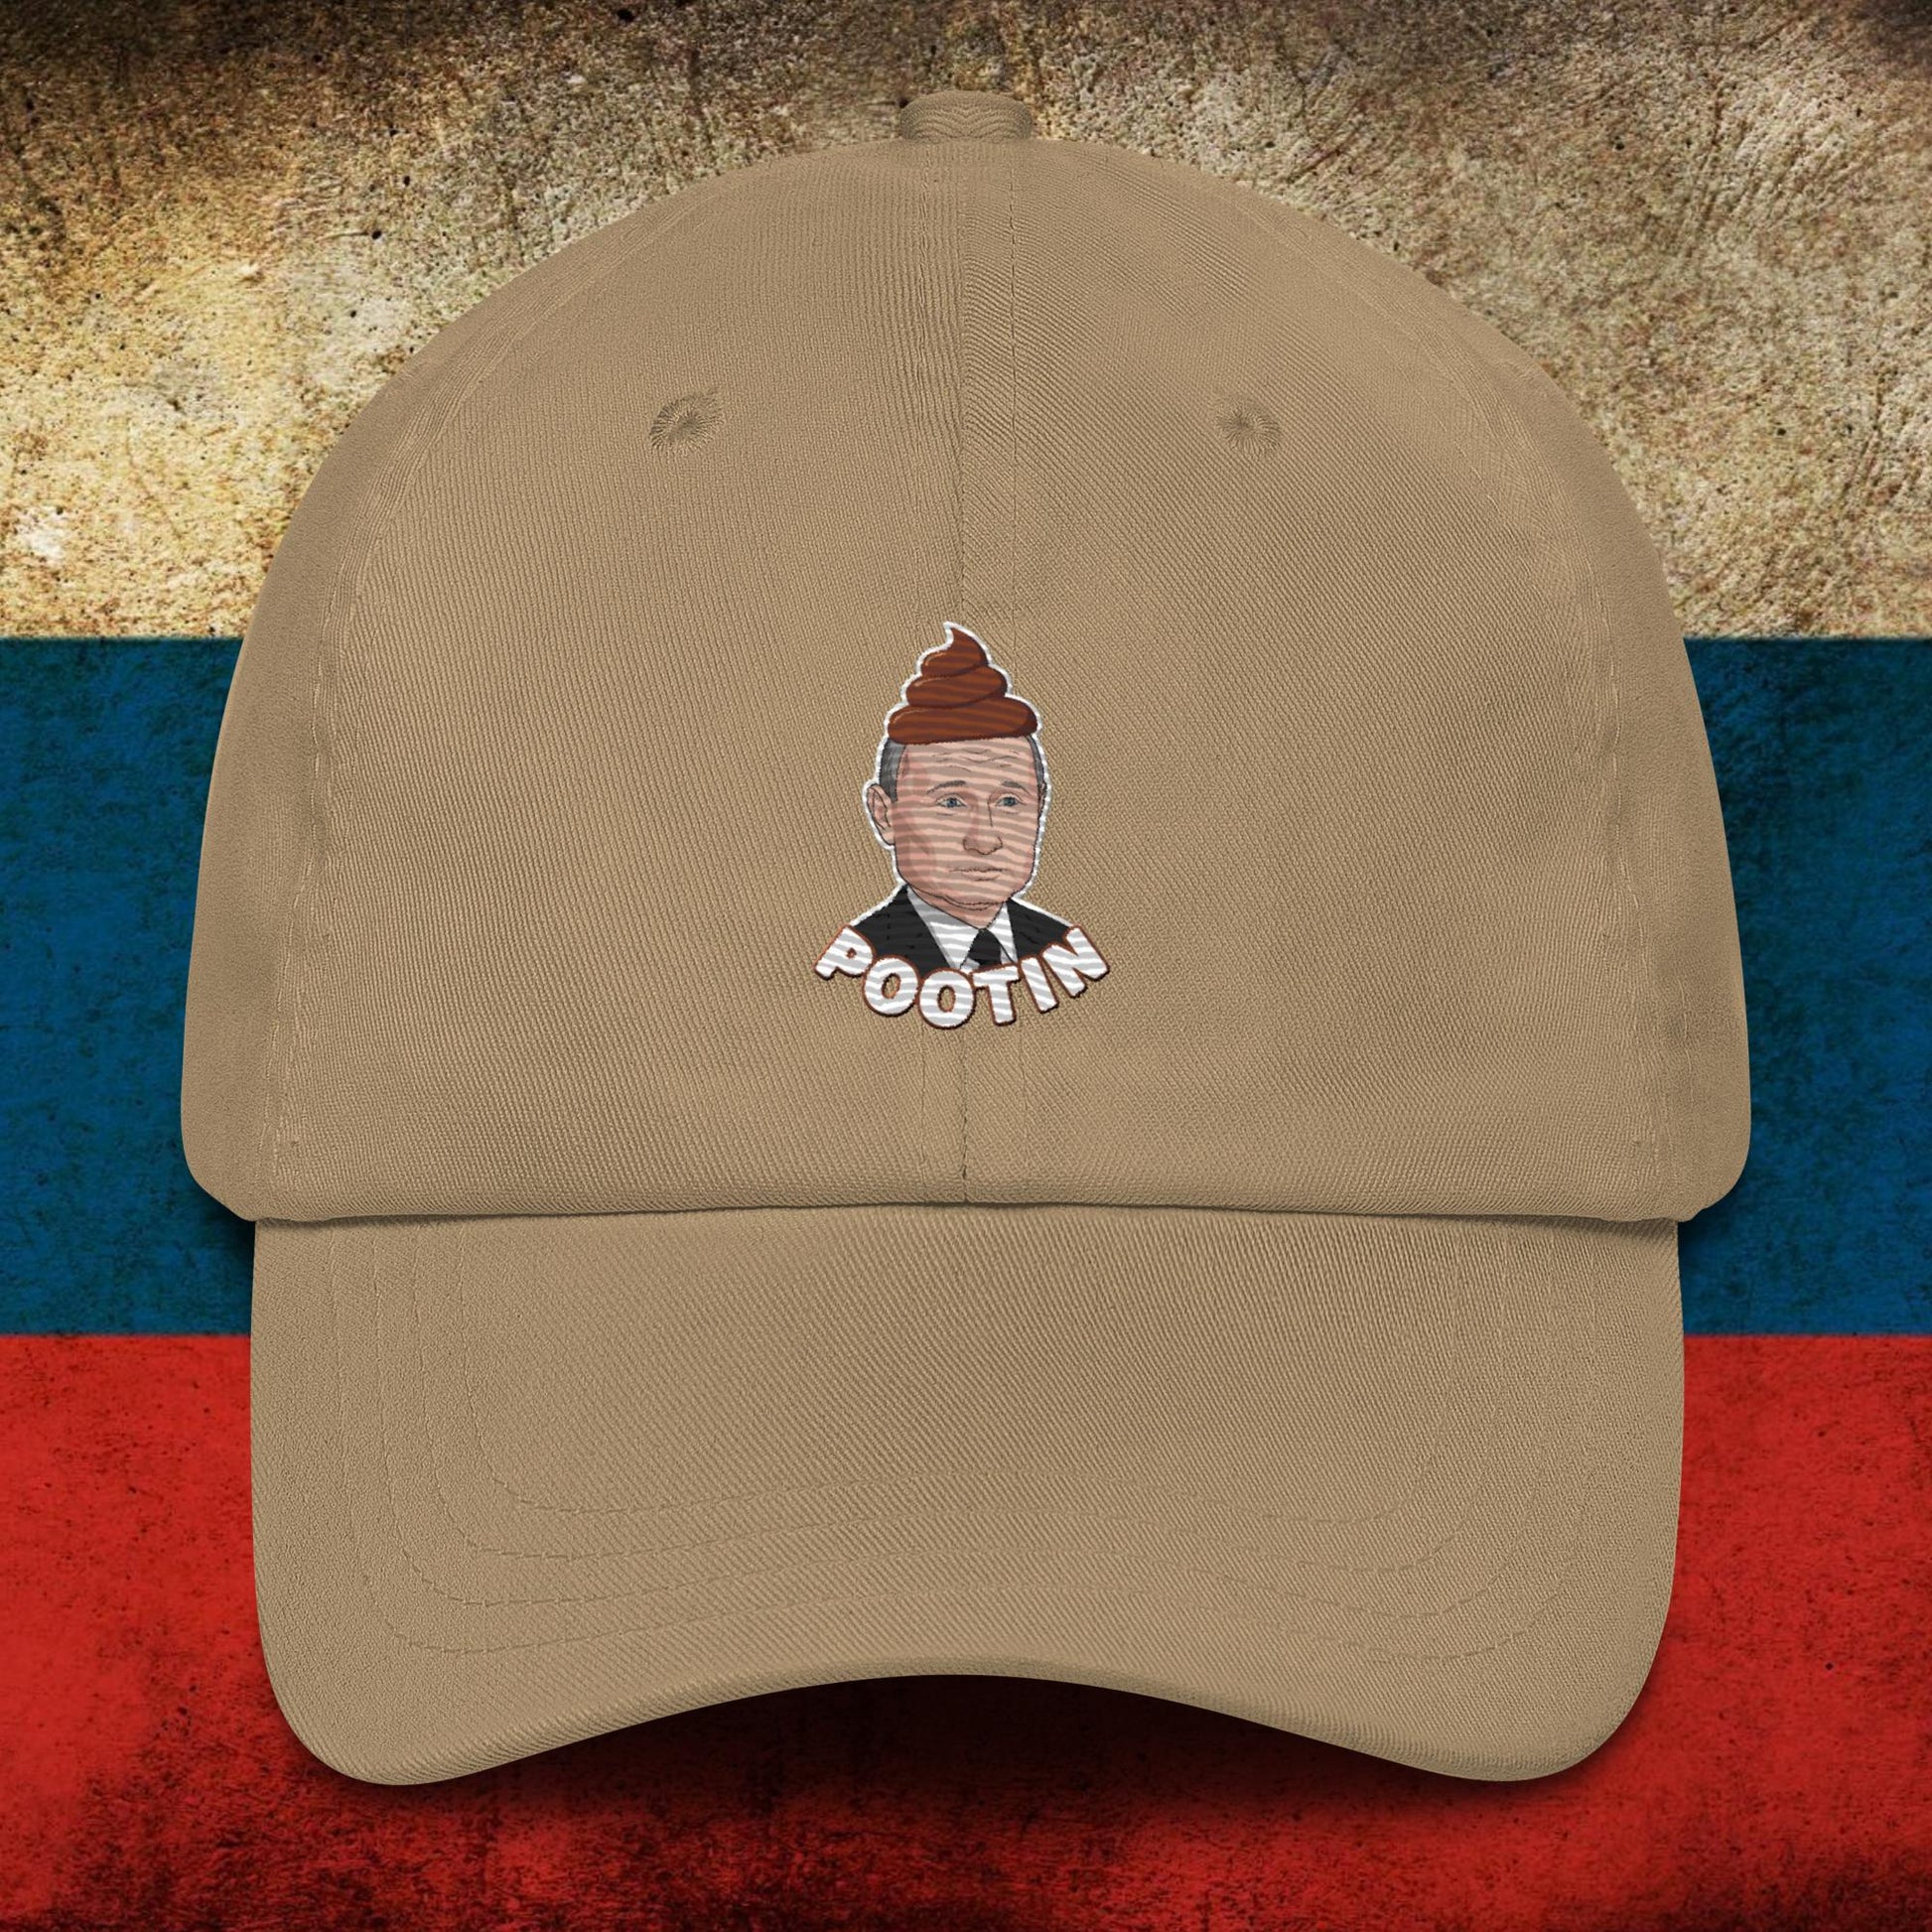 Pootin Funny Anti Vladimir Putin Dad hat Next Cult Brand